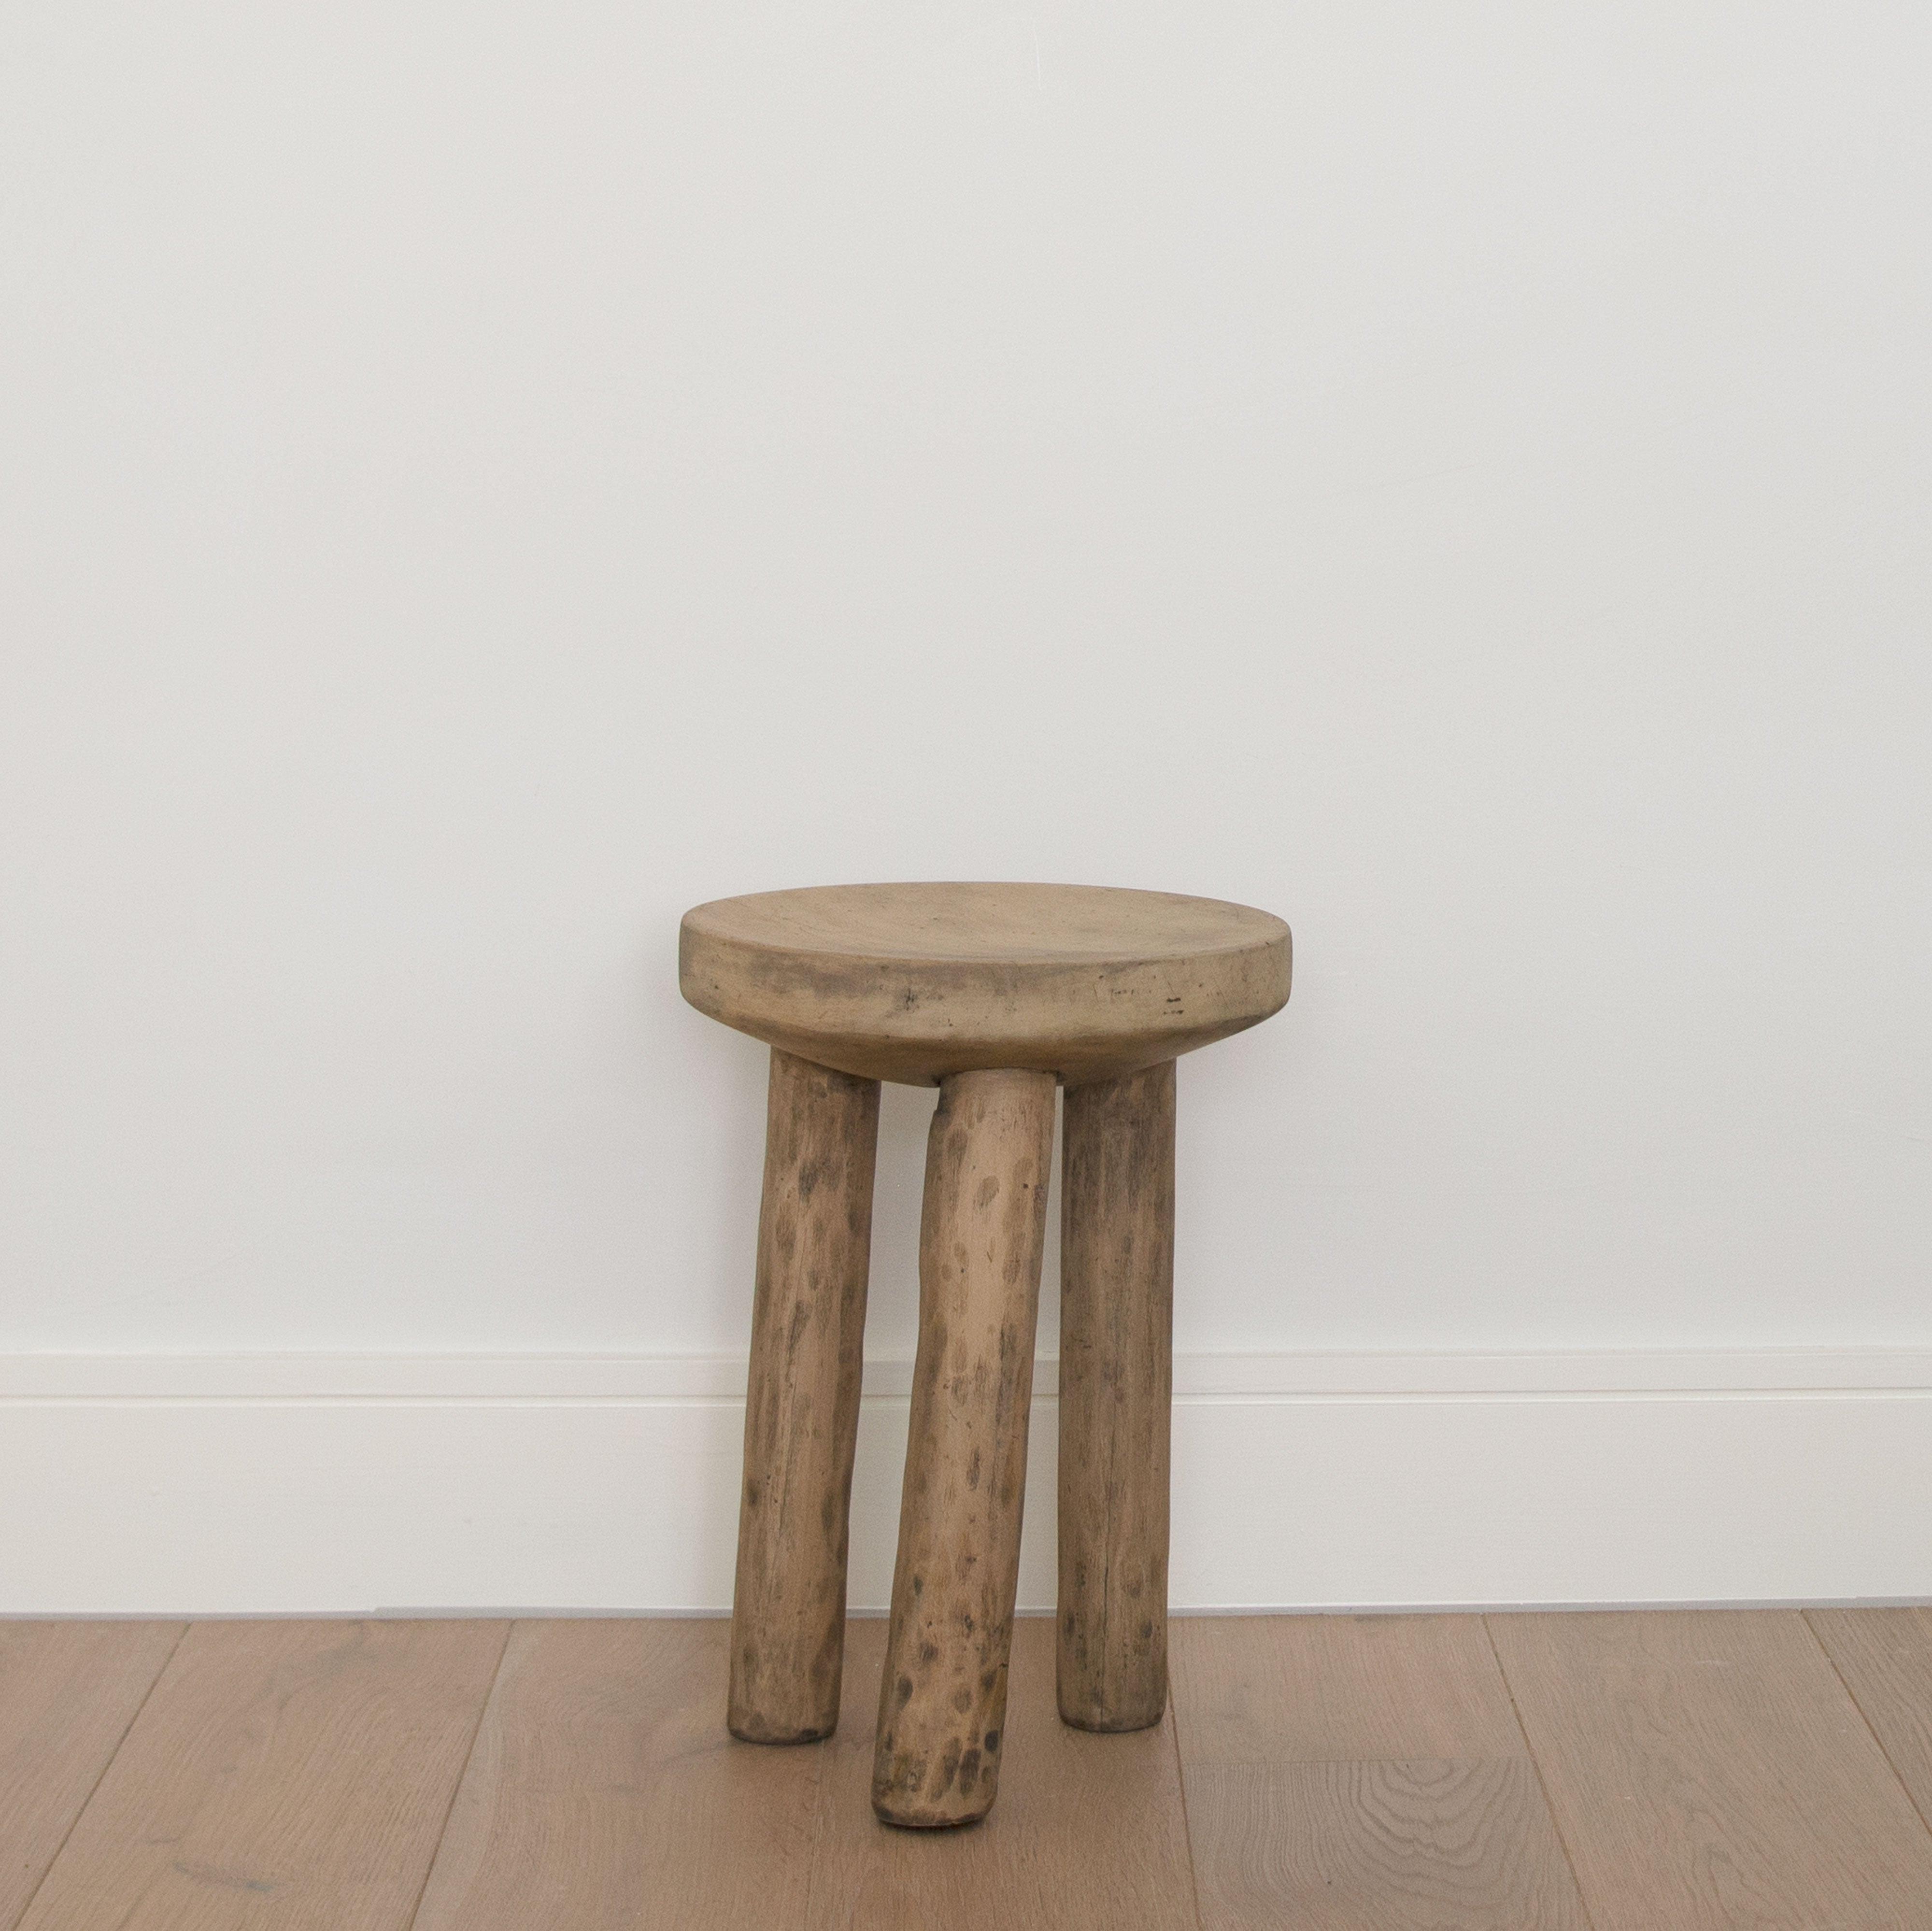 Handmade Arden wooden side table